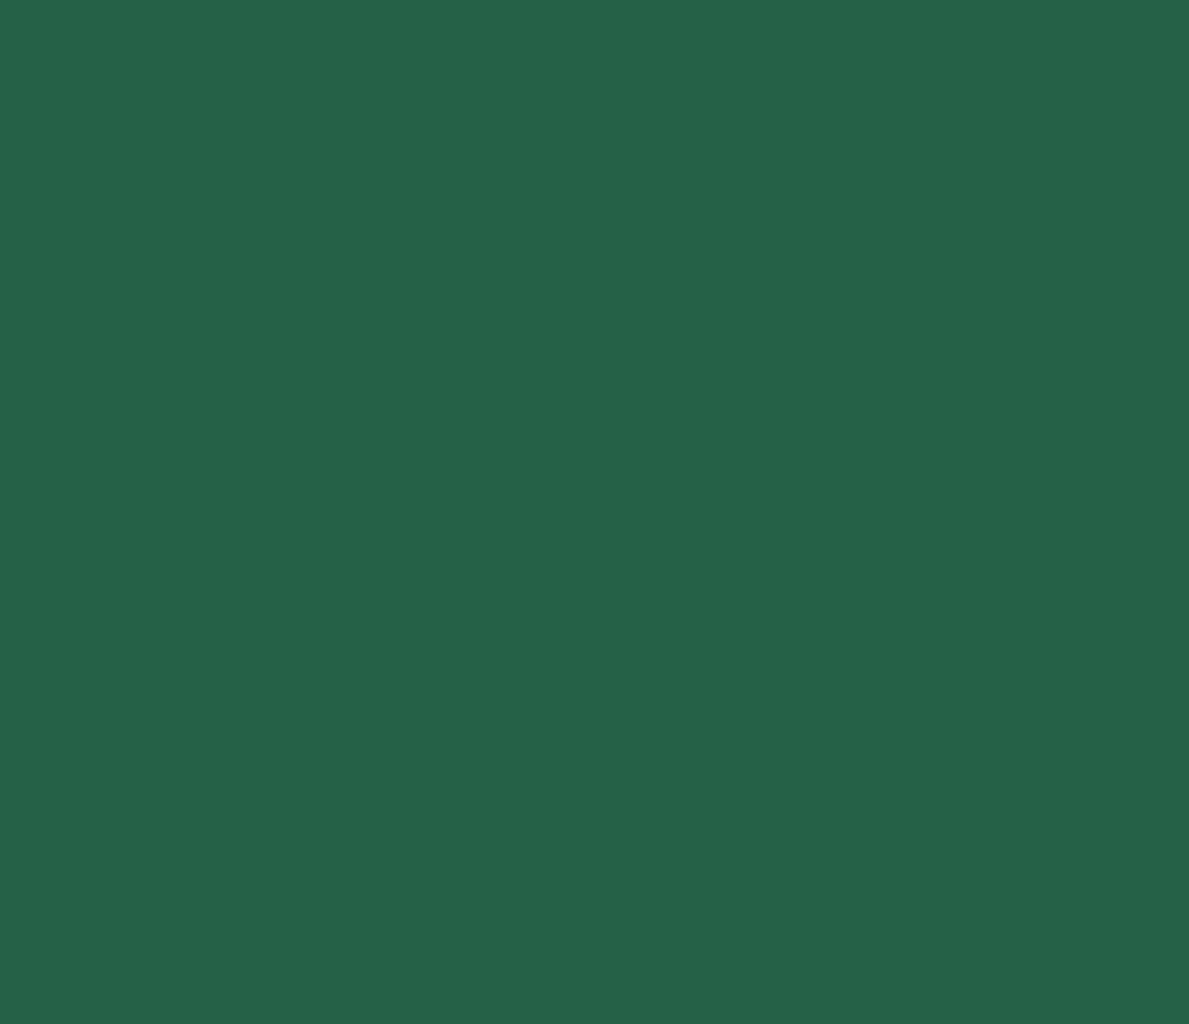 Fahr-/drehbare Tafel Stahlemaille grün